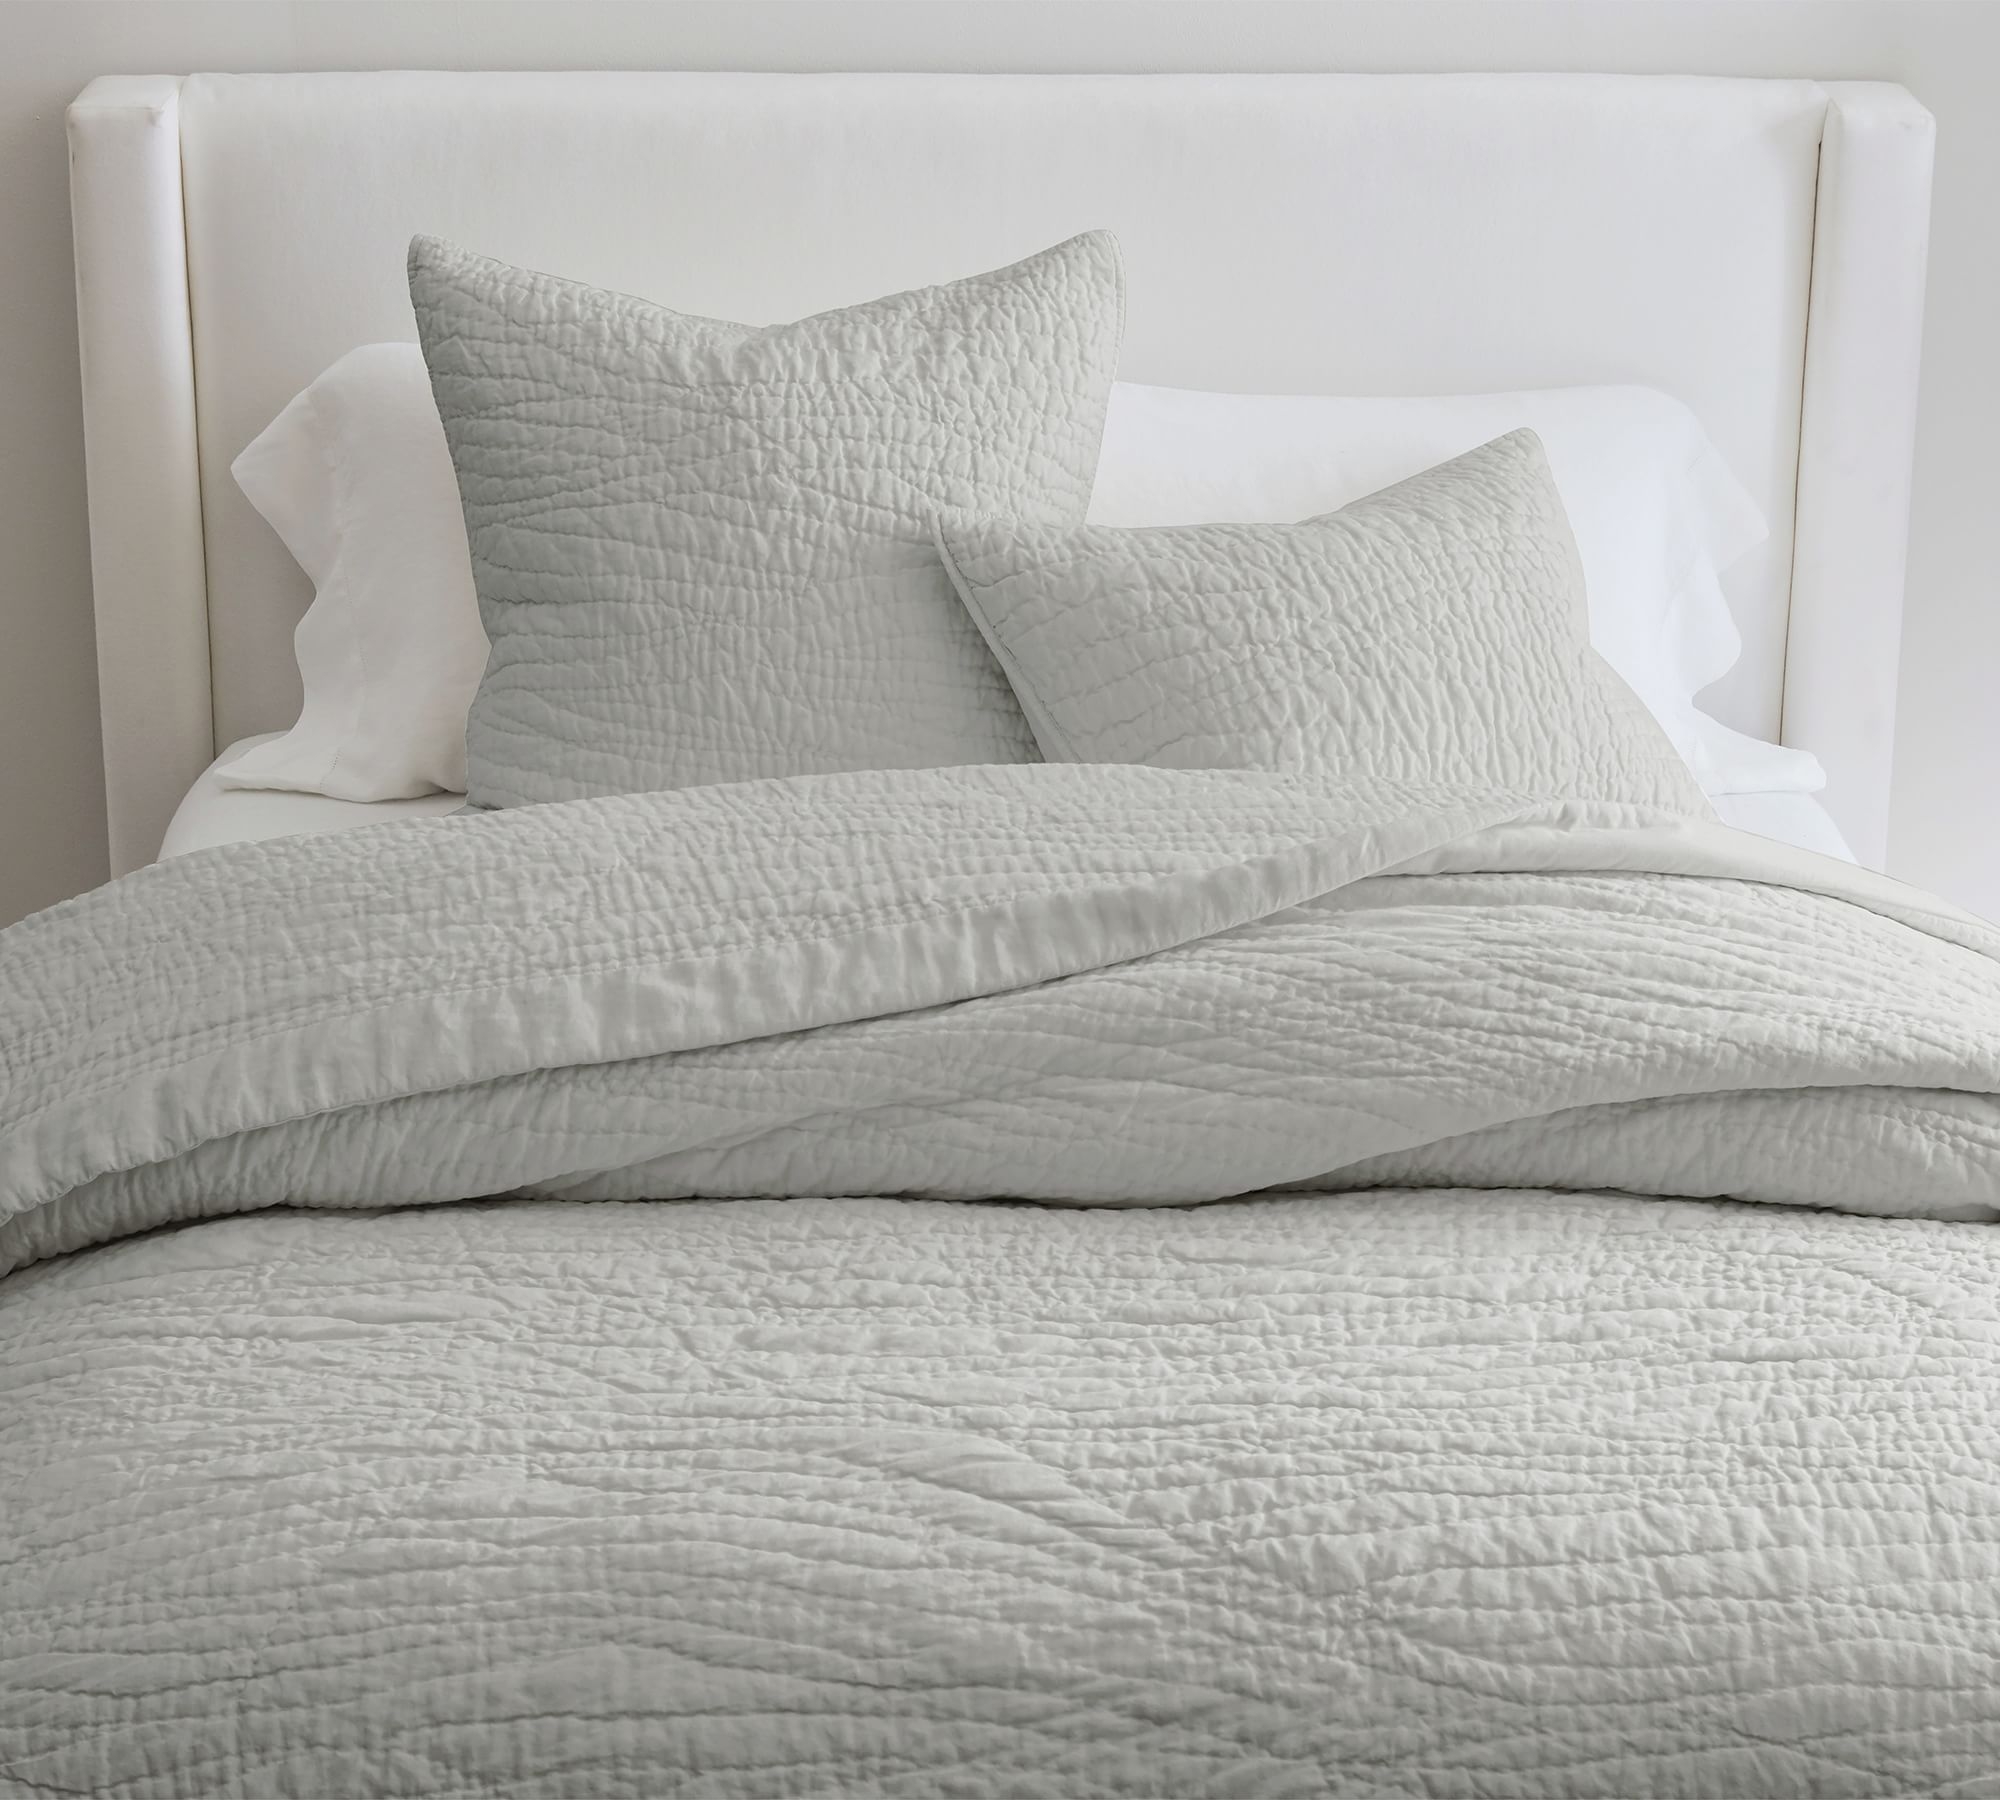 Belgian Flax Linen Handcrafted Quilt, Full/Queen, Soft Gray - Image 0